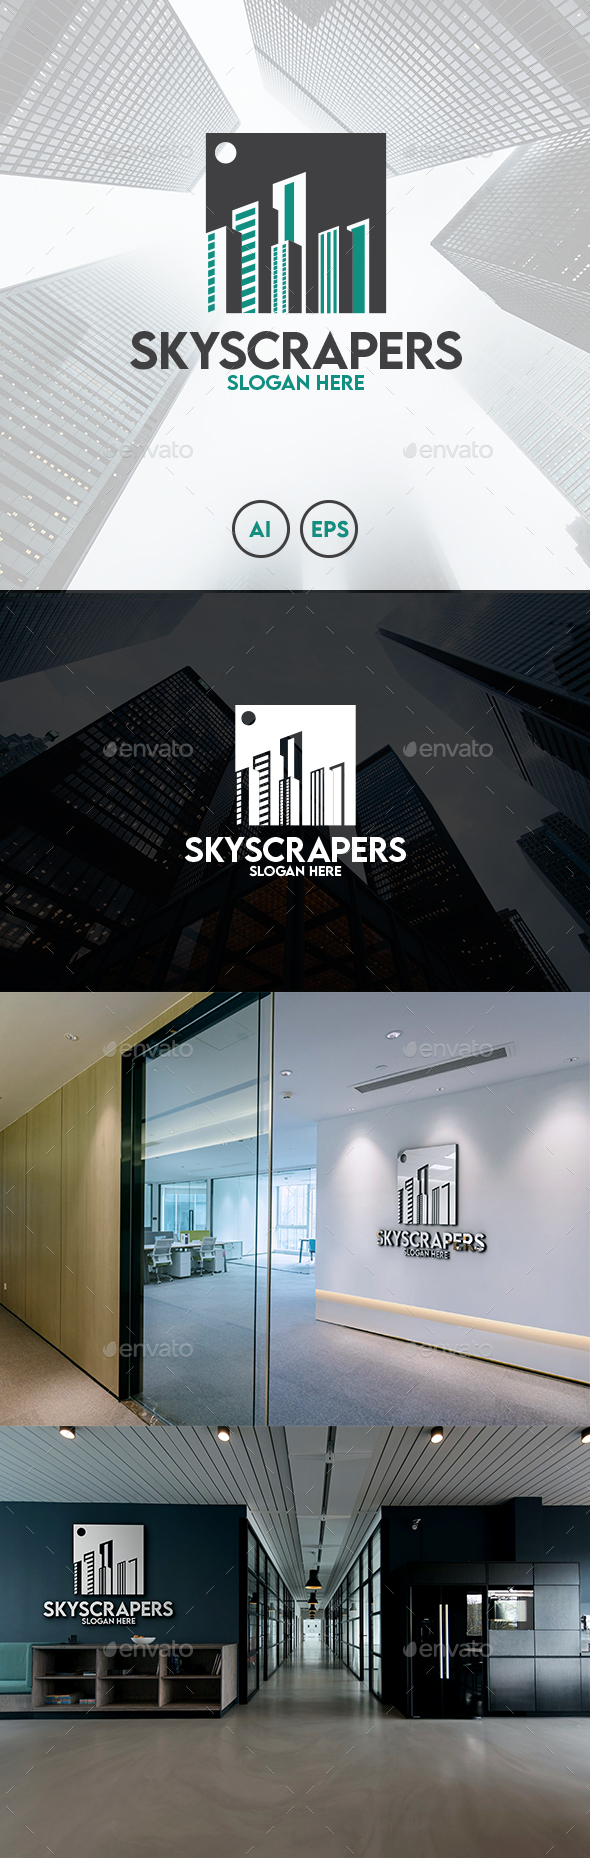 Skyscrapers logo - Real estate logo